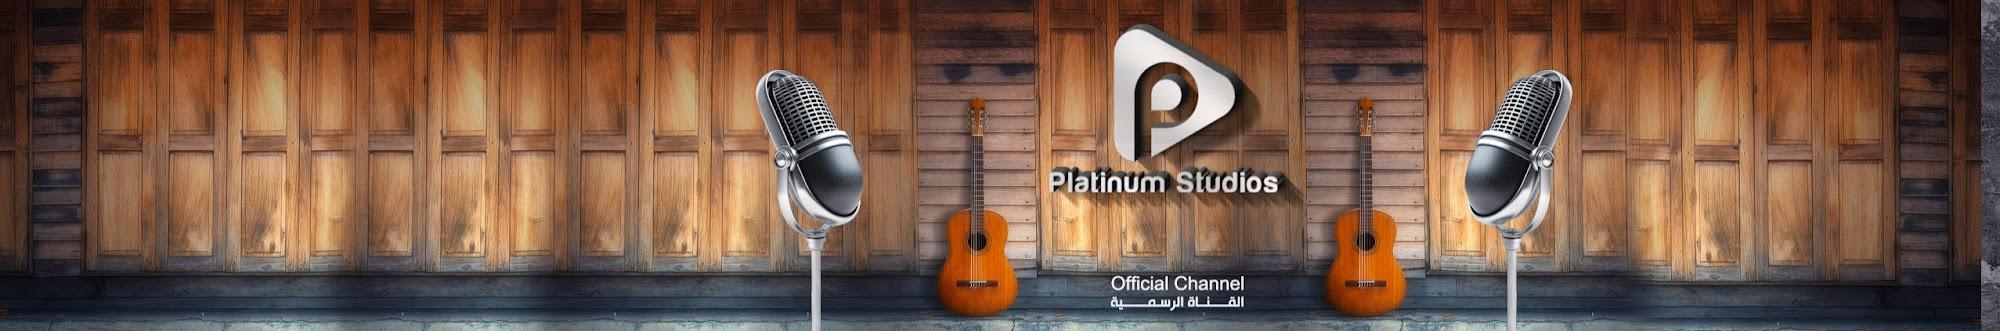 Platinum Studios | استوديوهات بلاتينيوم